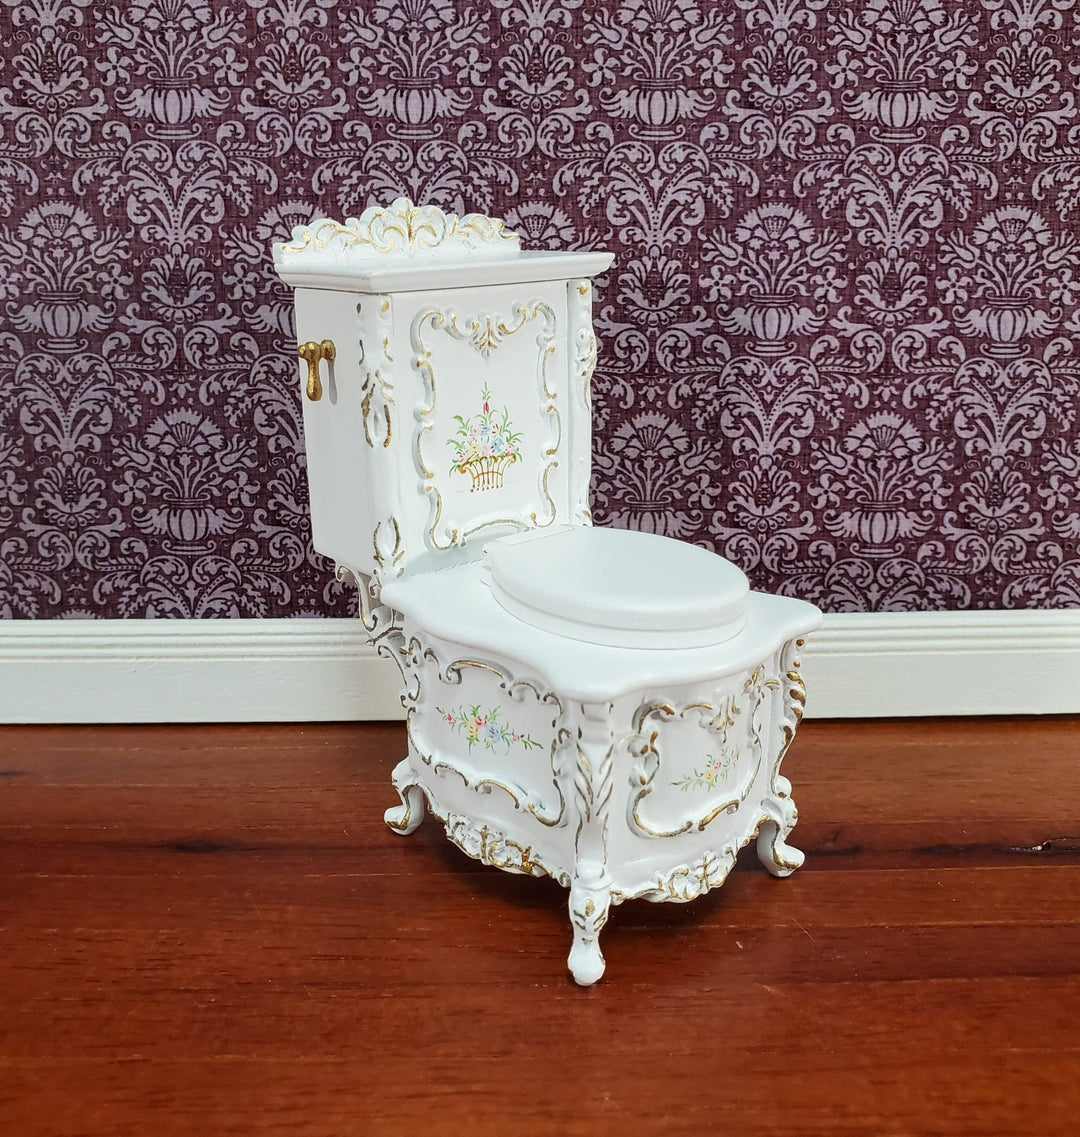 JBM Miniature Bathroom Toilet White & Gold Baroque Style 1:12 Scale Dollhouse - Miniature Crush